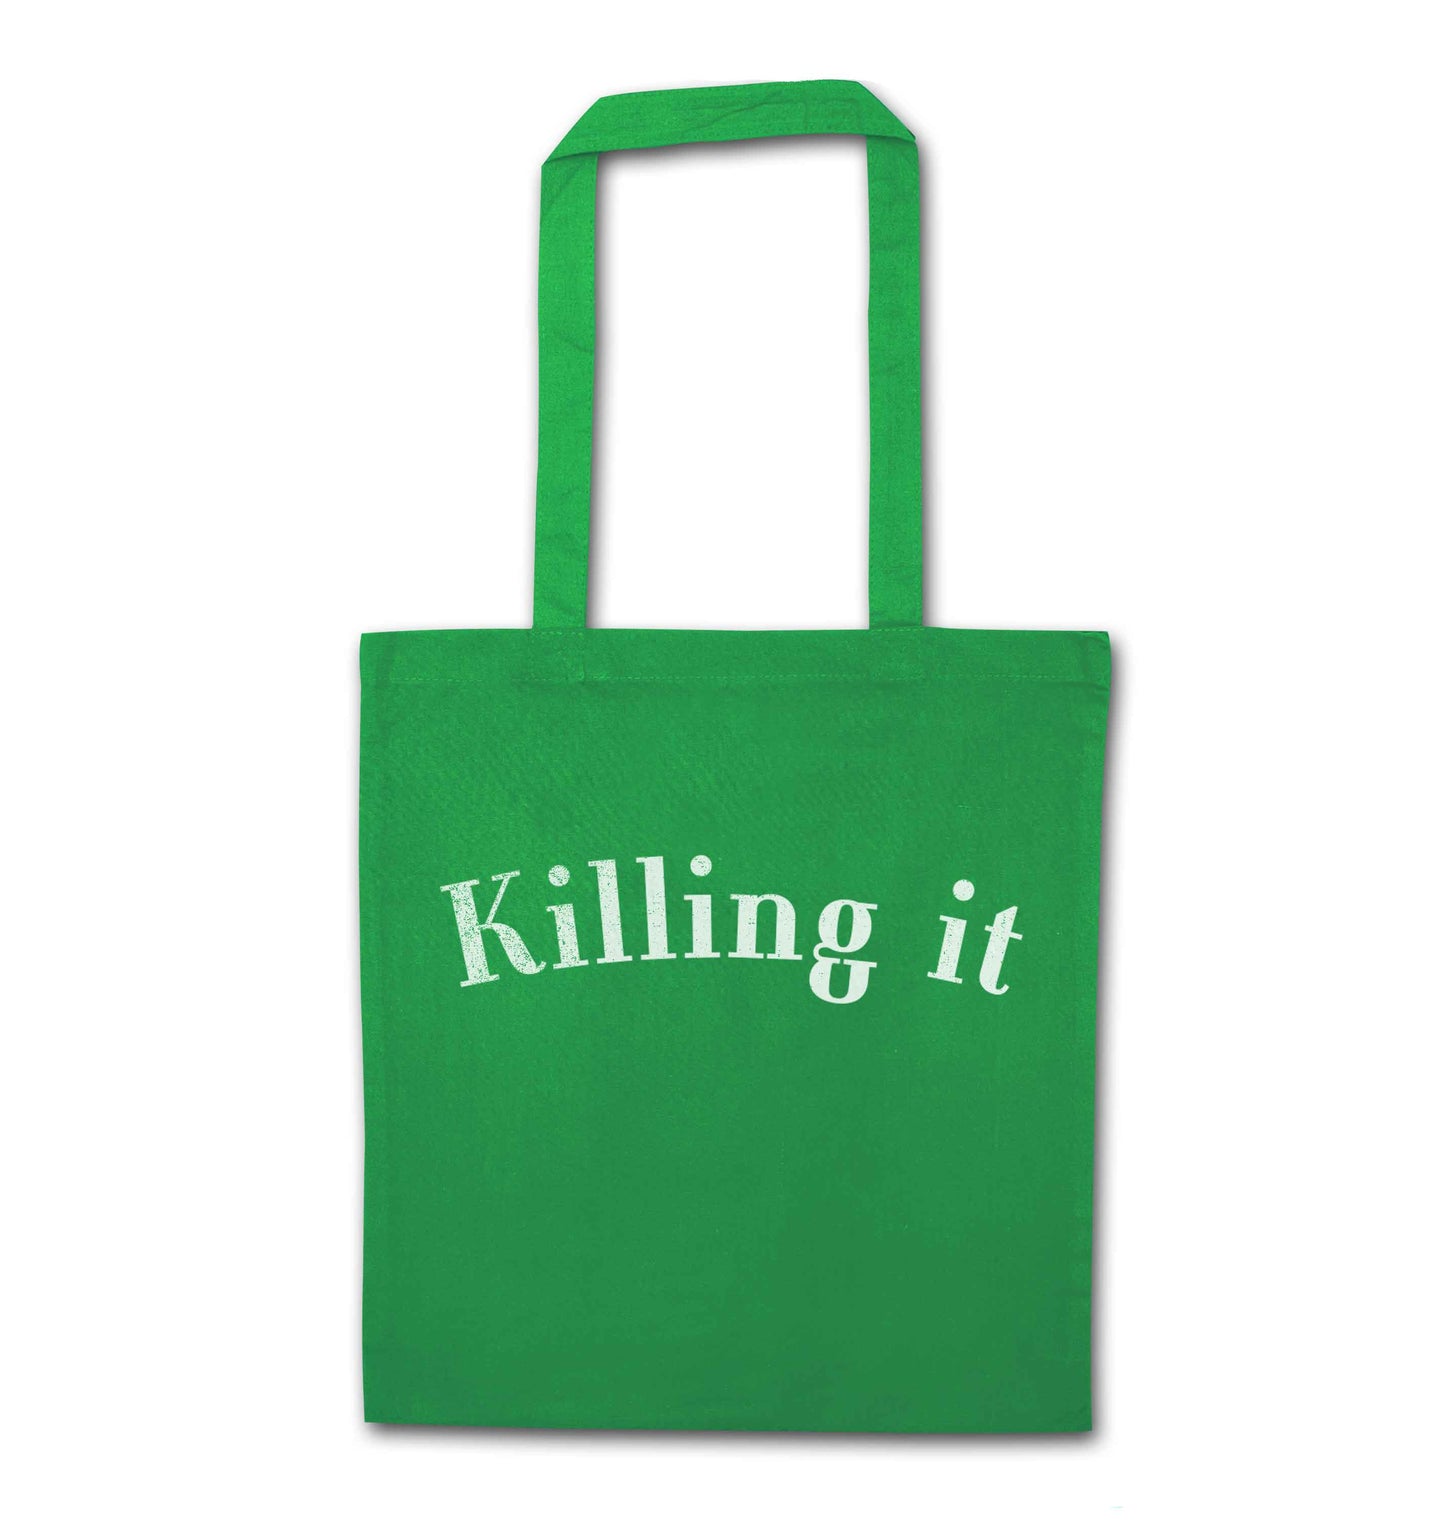 Killing it green tote bag